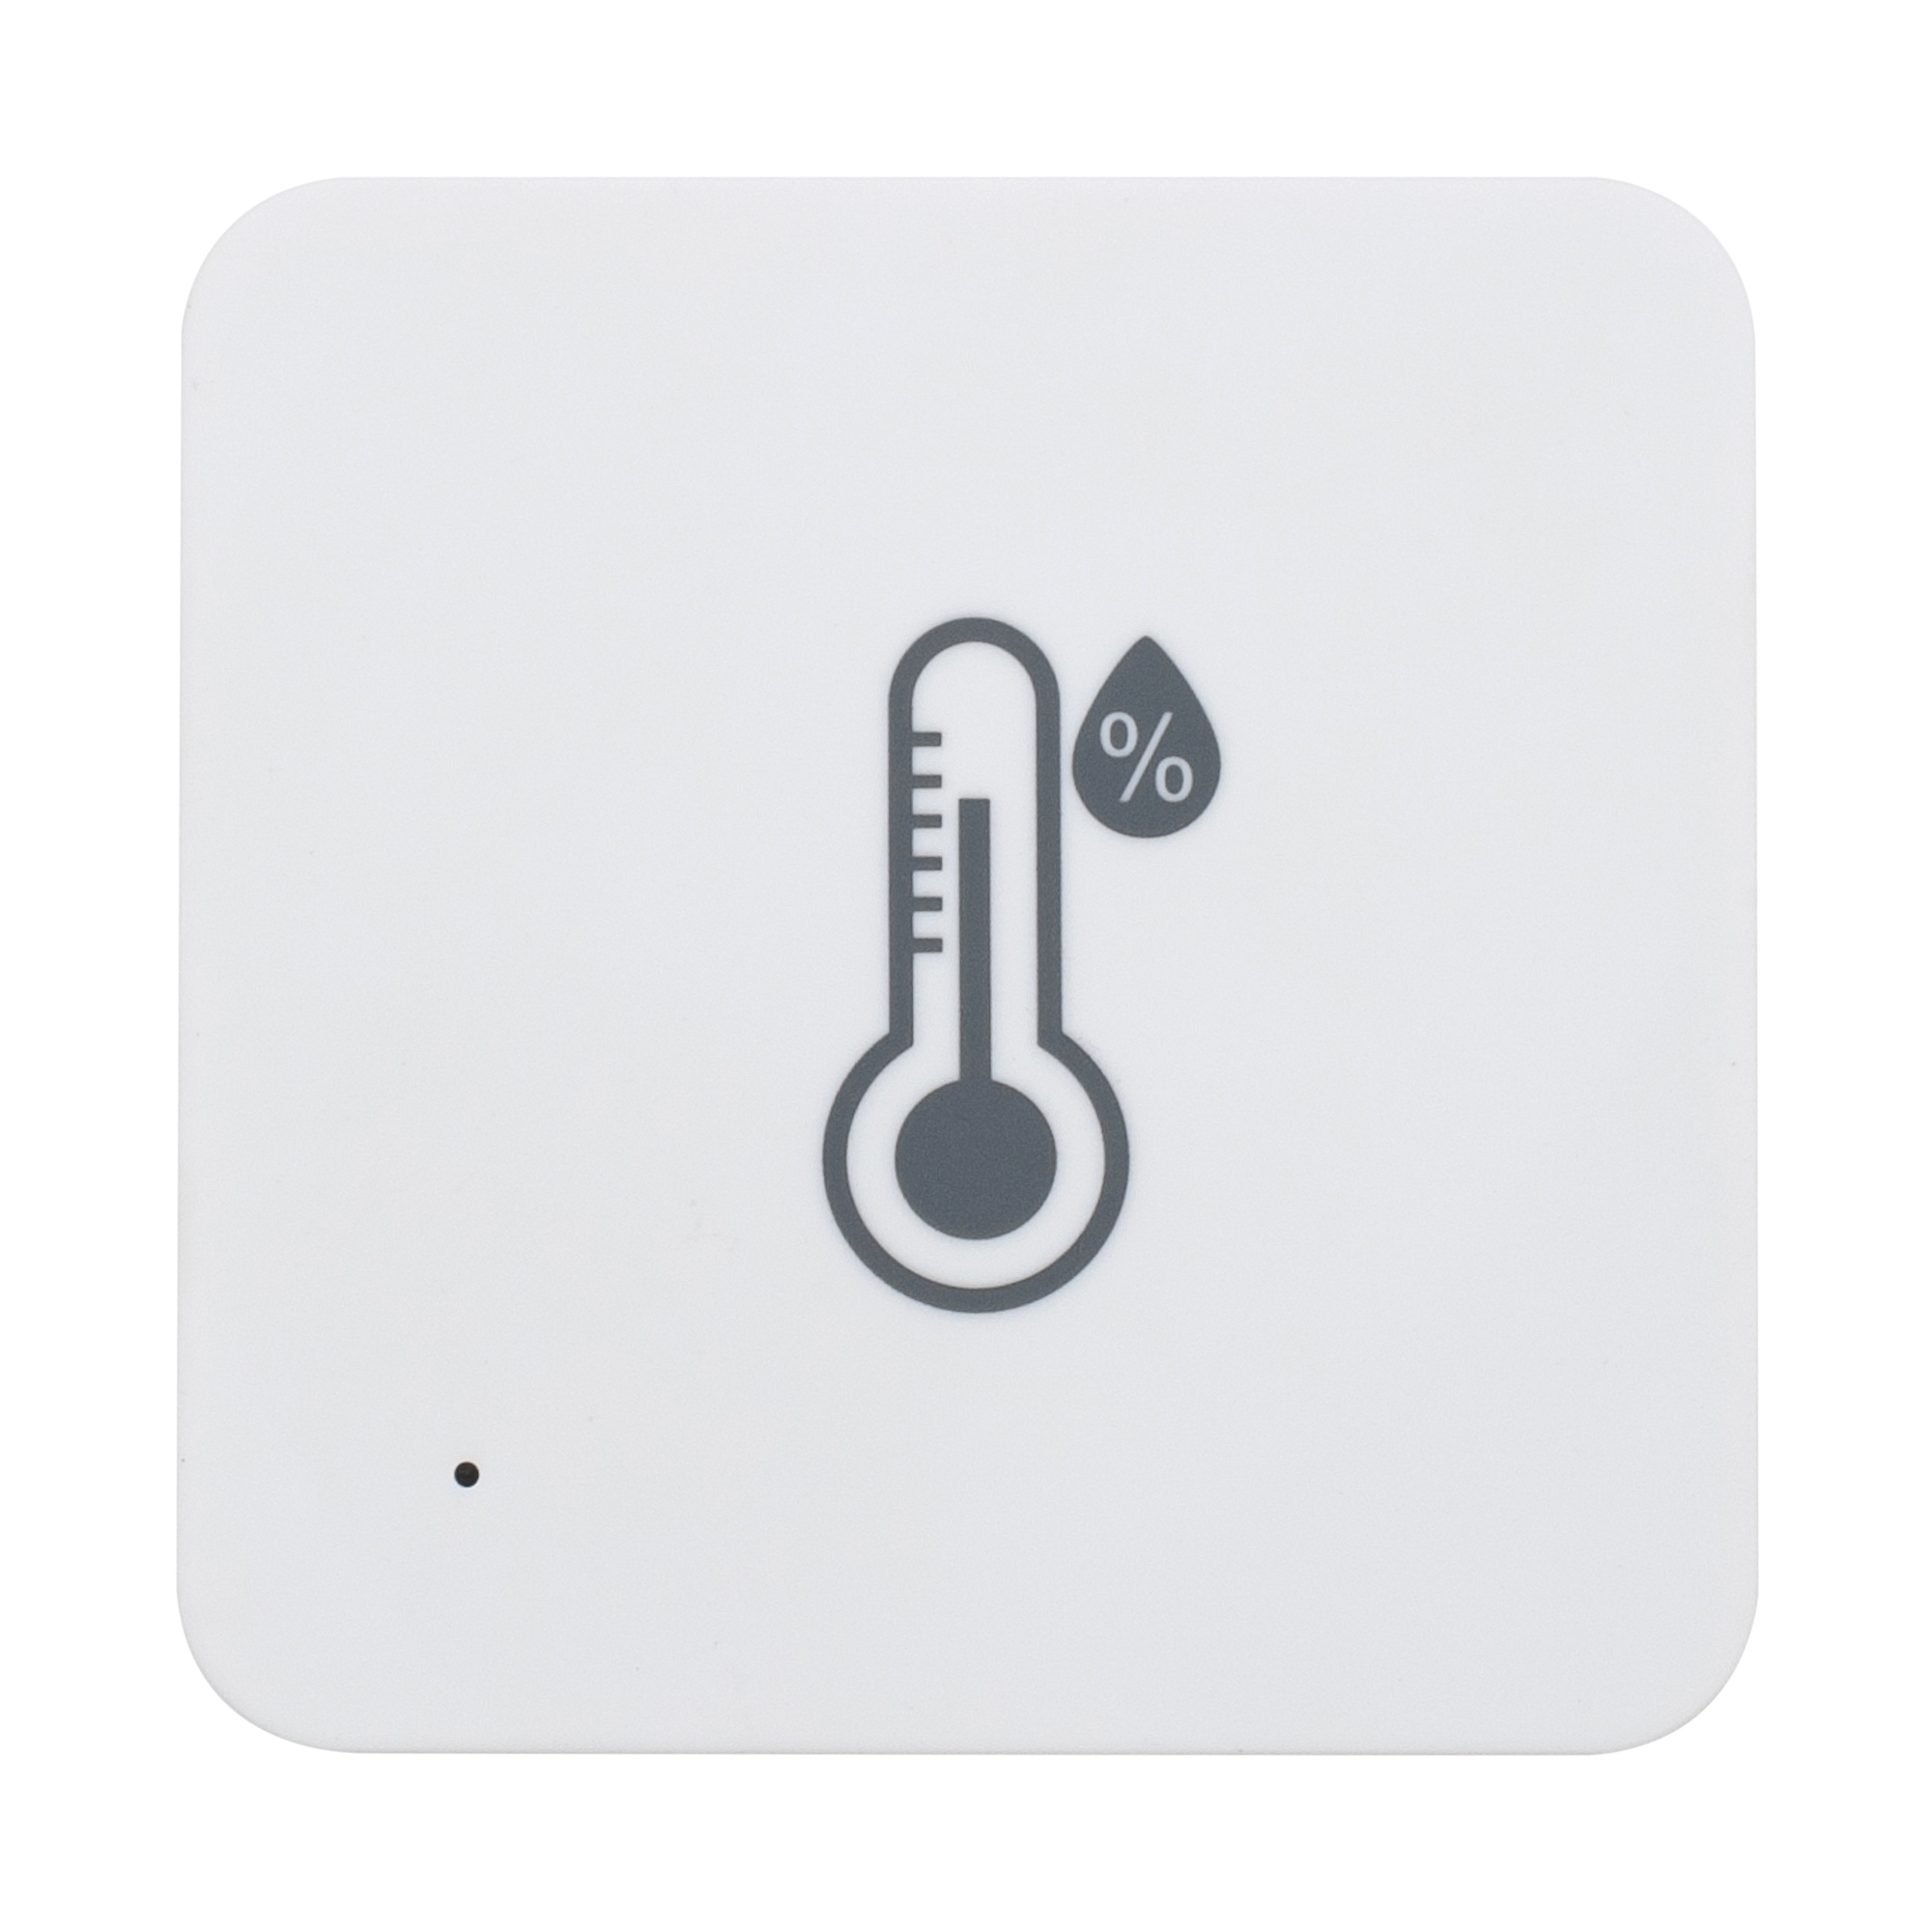 Temperature & Humidity sensor (LHT52) based on LoRaWAN®